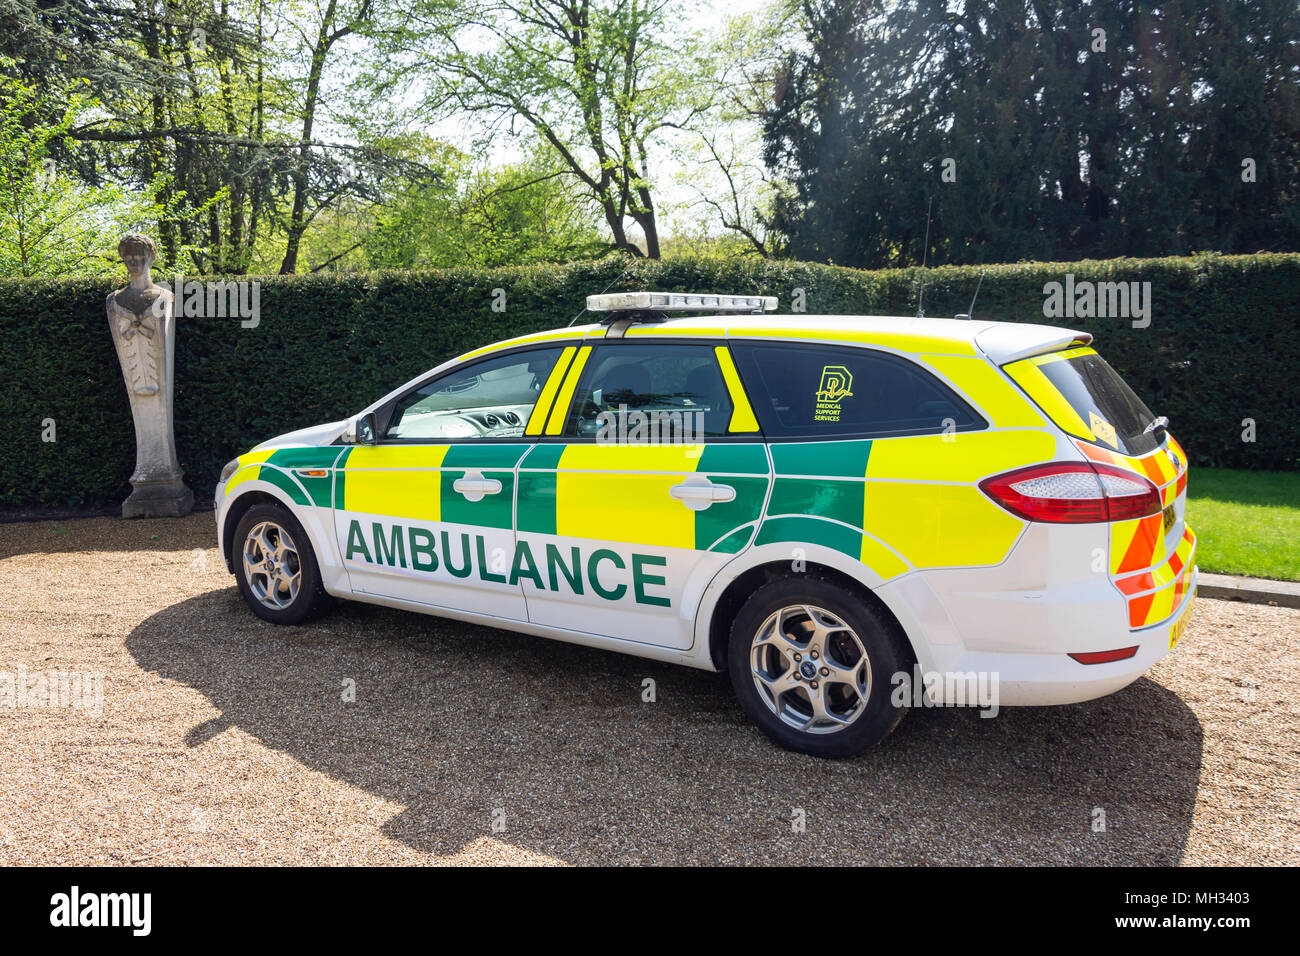 Ambulance parked at Chiswick House, Burlington Lane, Chiswick, London Borough of Hounslow, Greater London, England, United Kingdom Stock Photo